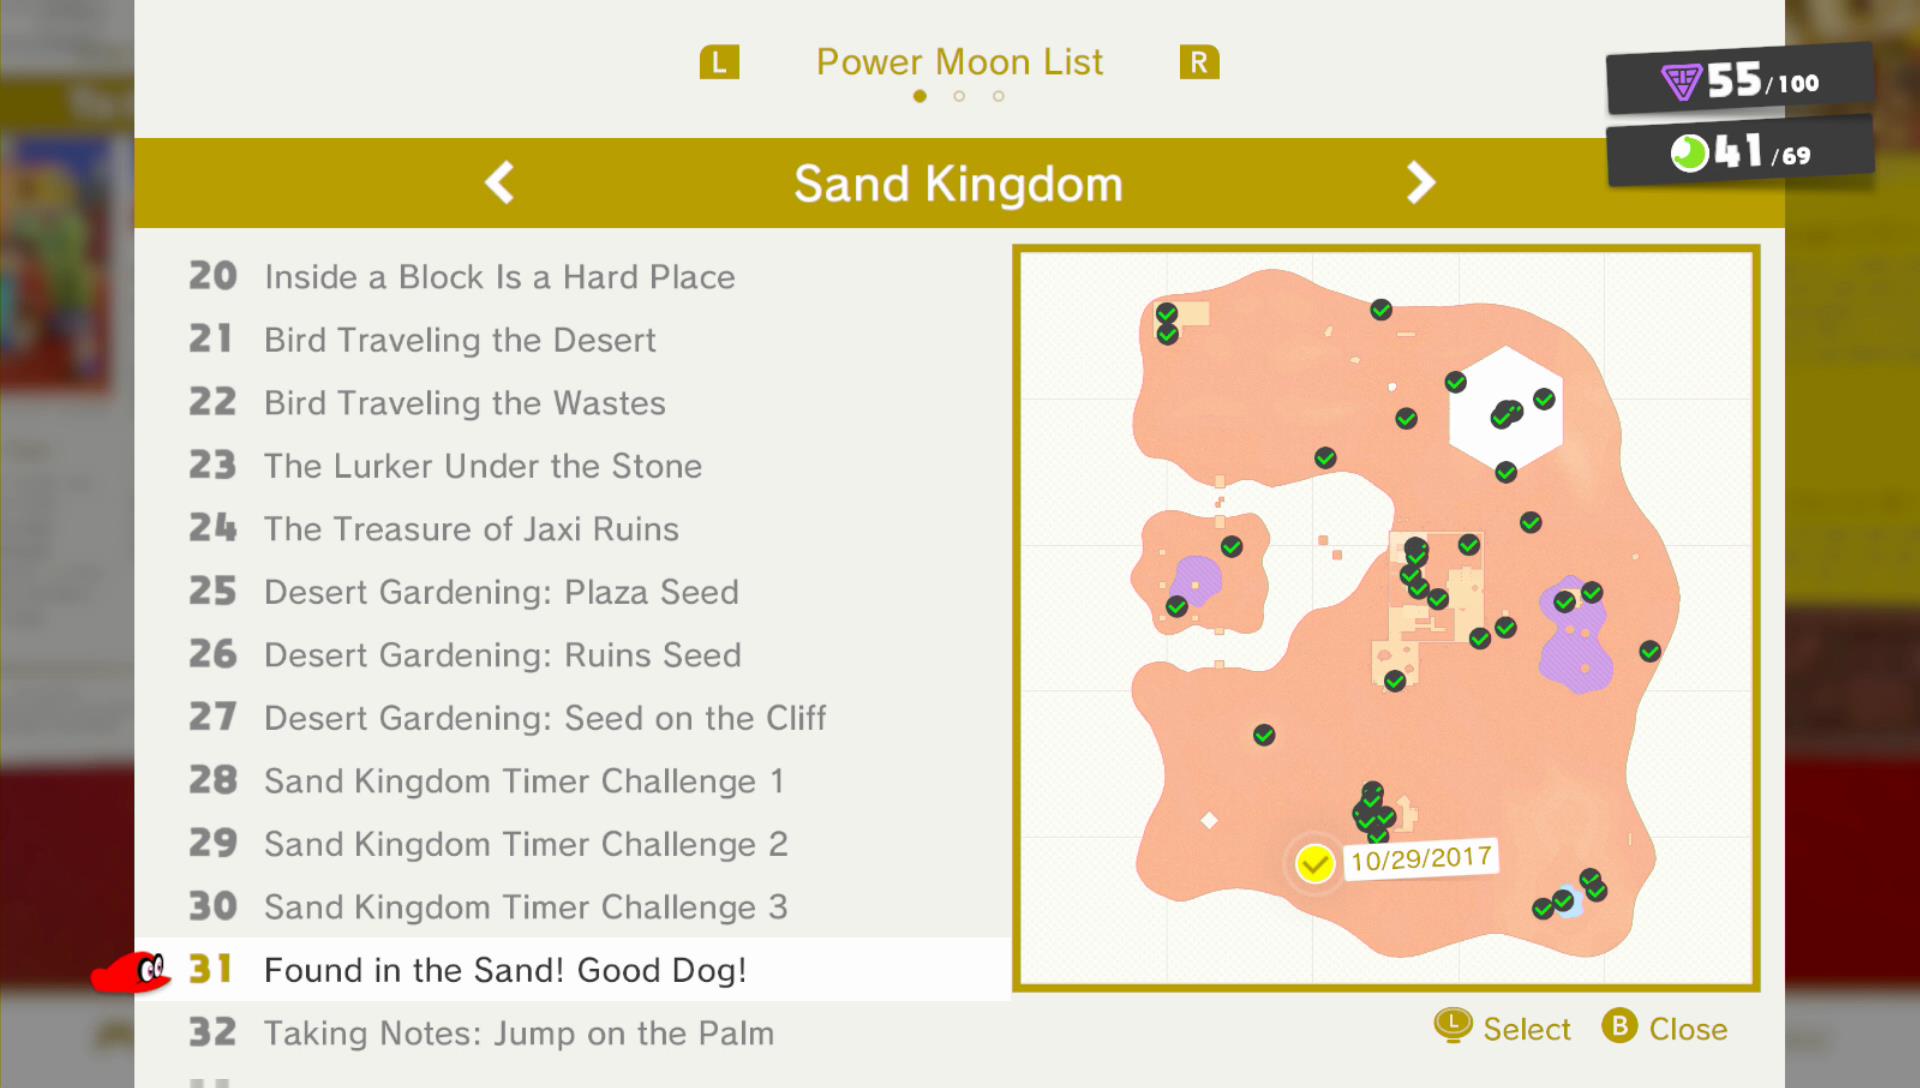 Sand Kingdom Power Moon 28 - Super Mario Odyssey Guide - IGN